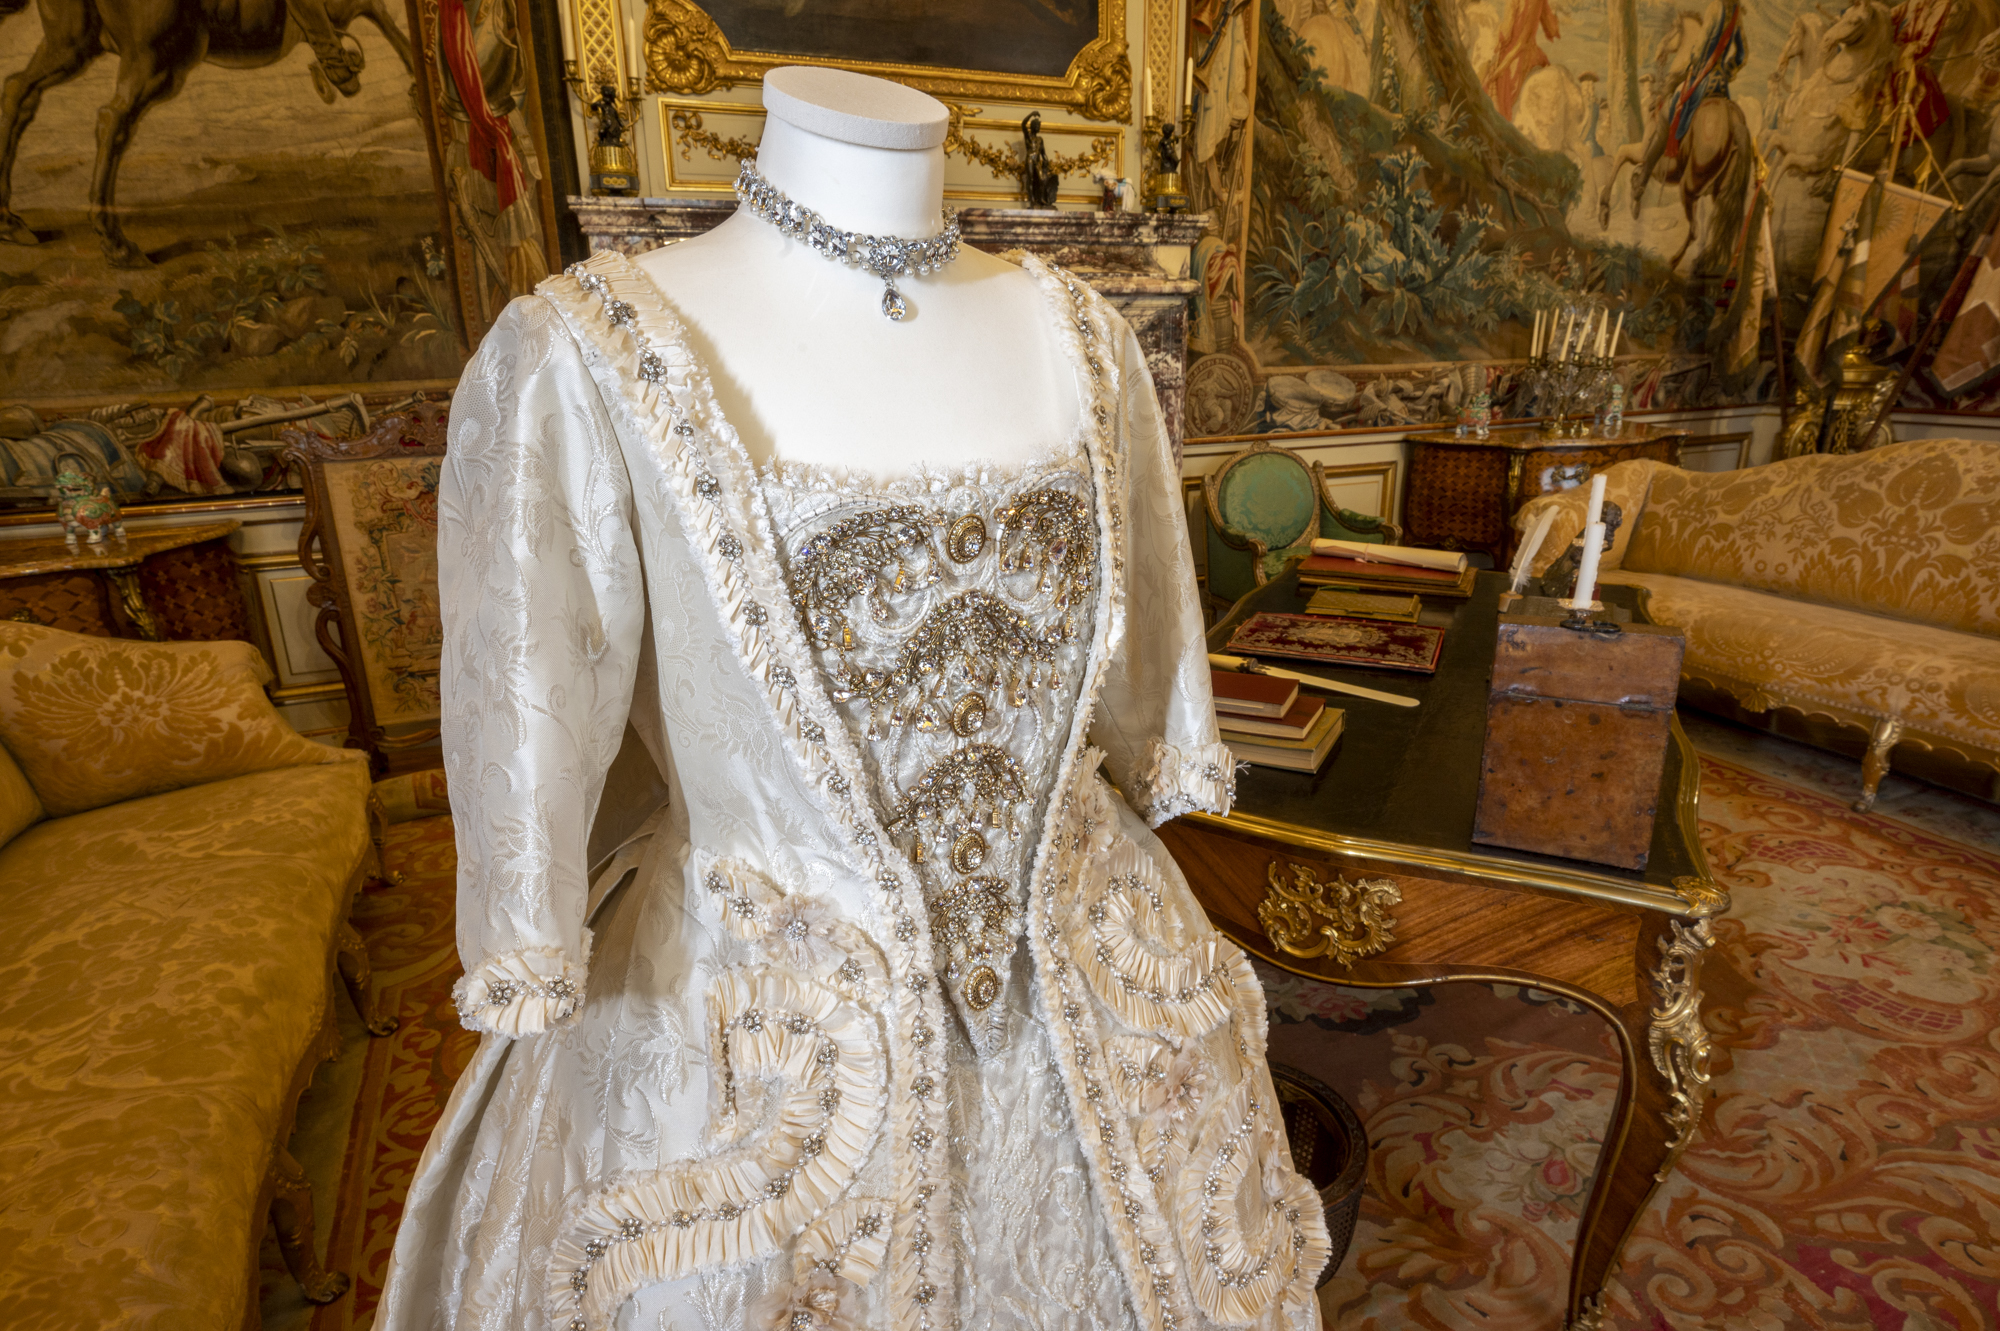 Bridgerton Ballgowns at Blenheim Palace - pearl detailed gown